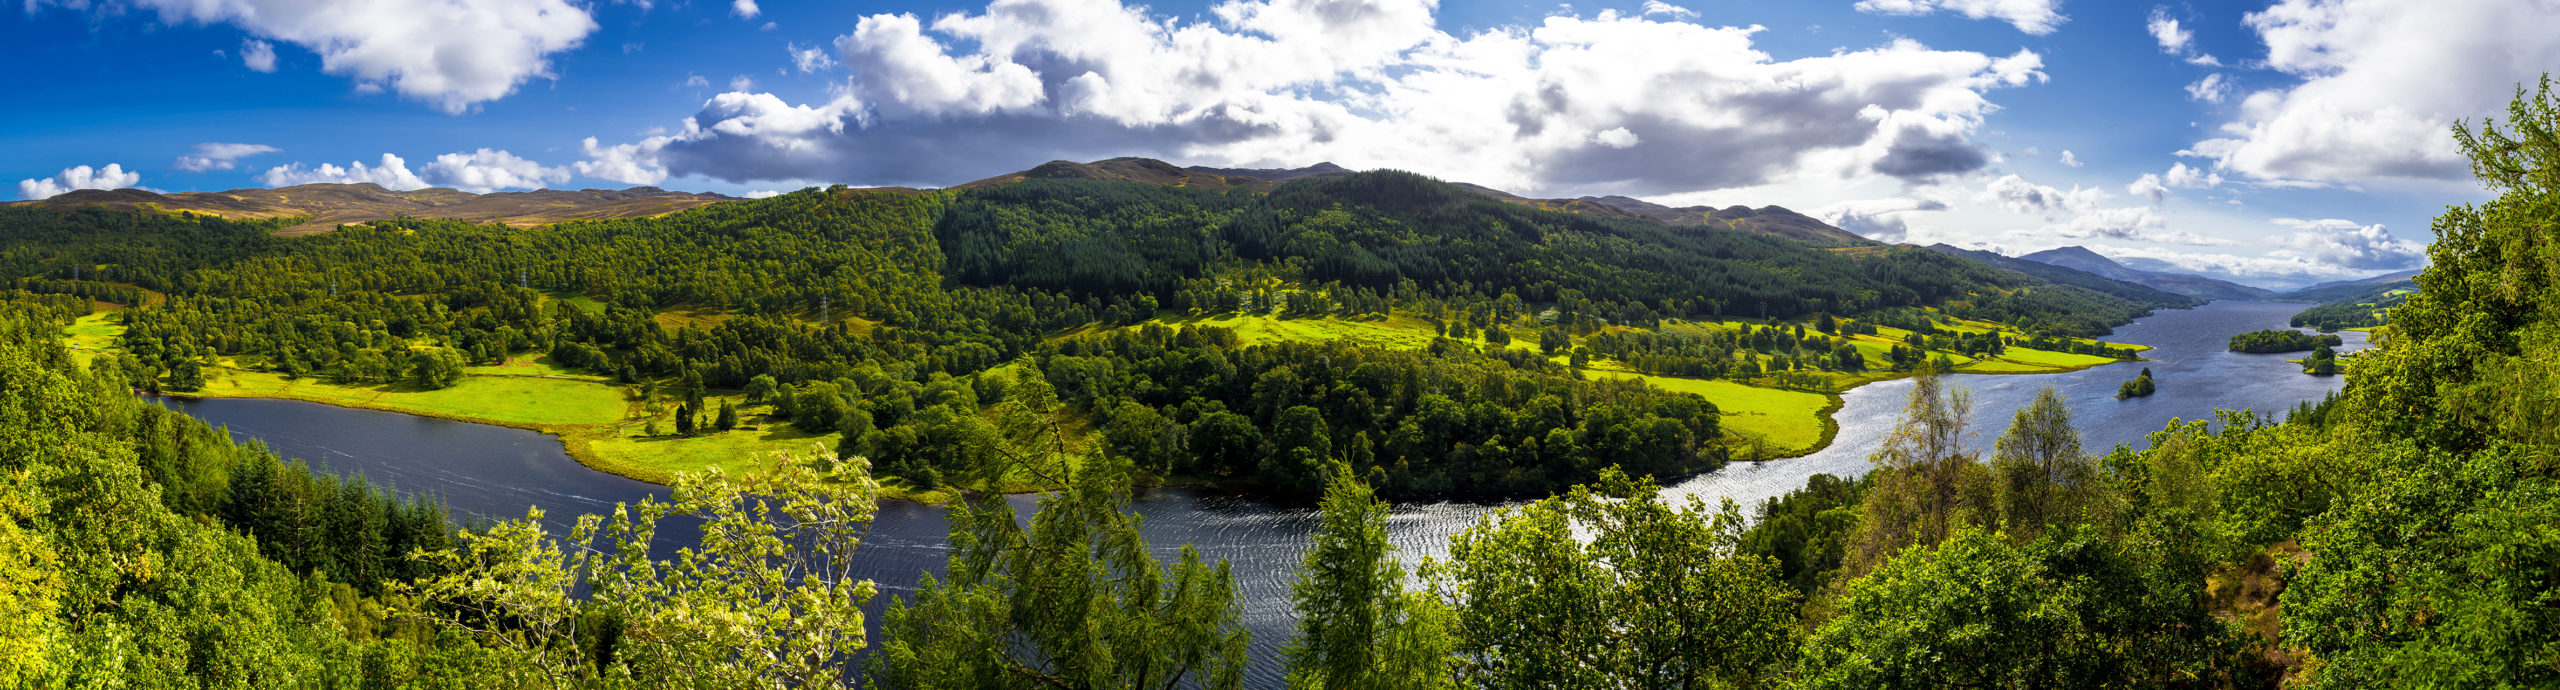 Panoramic View Over Loch Tummel